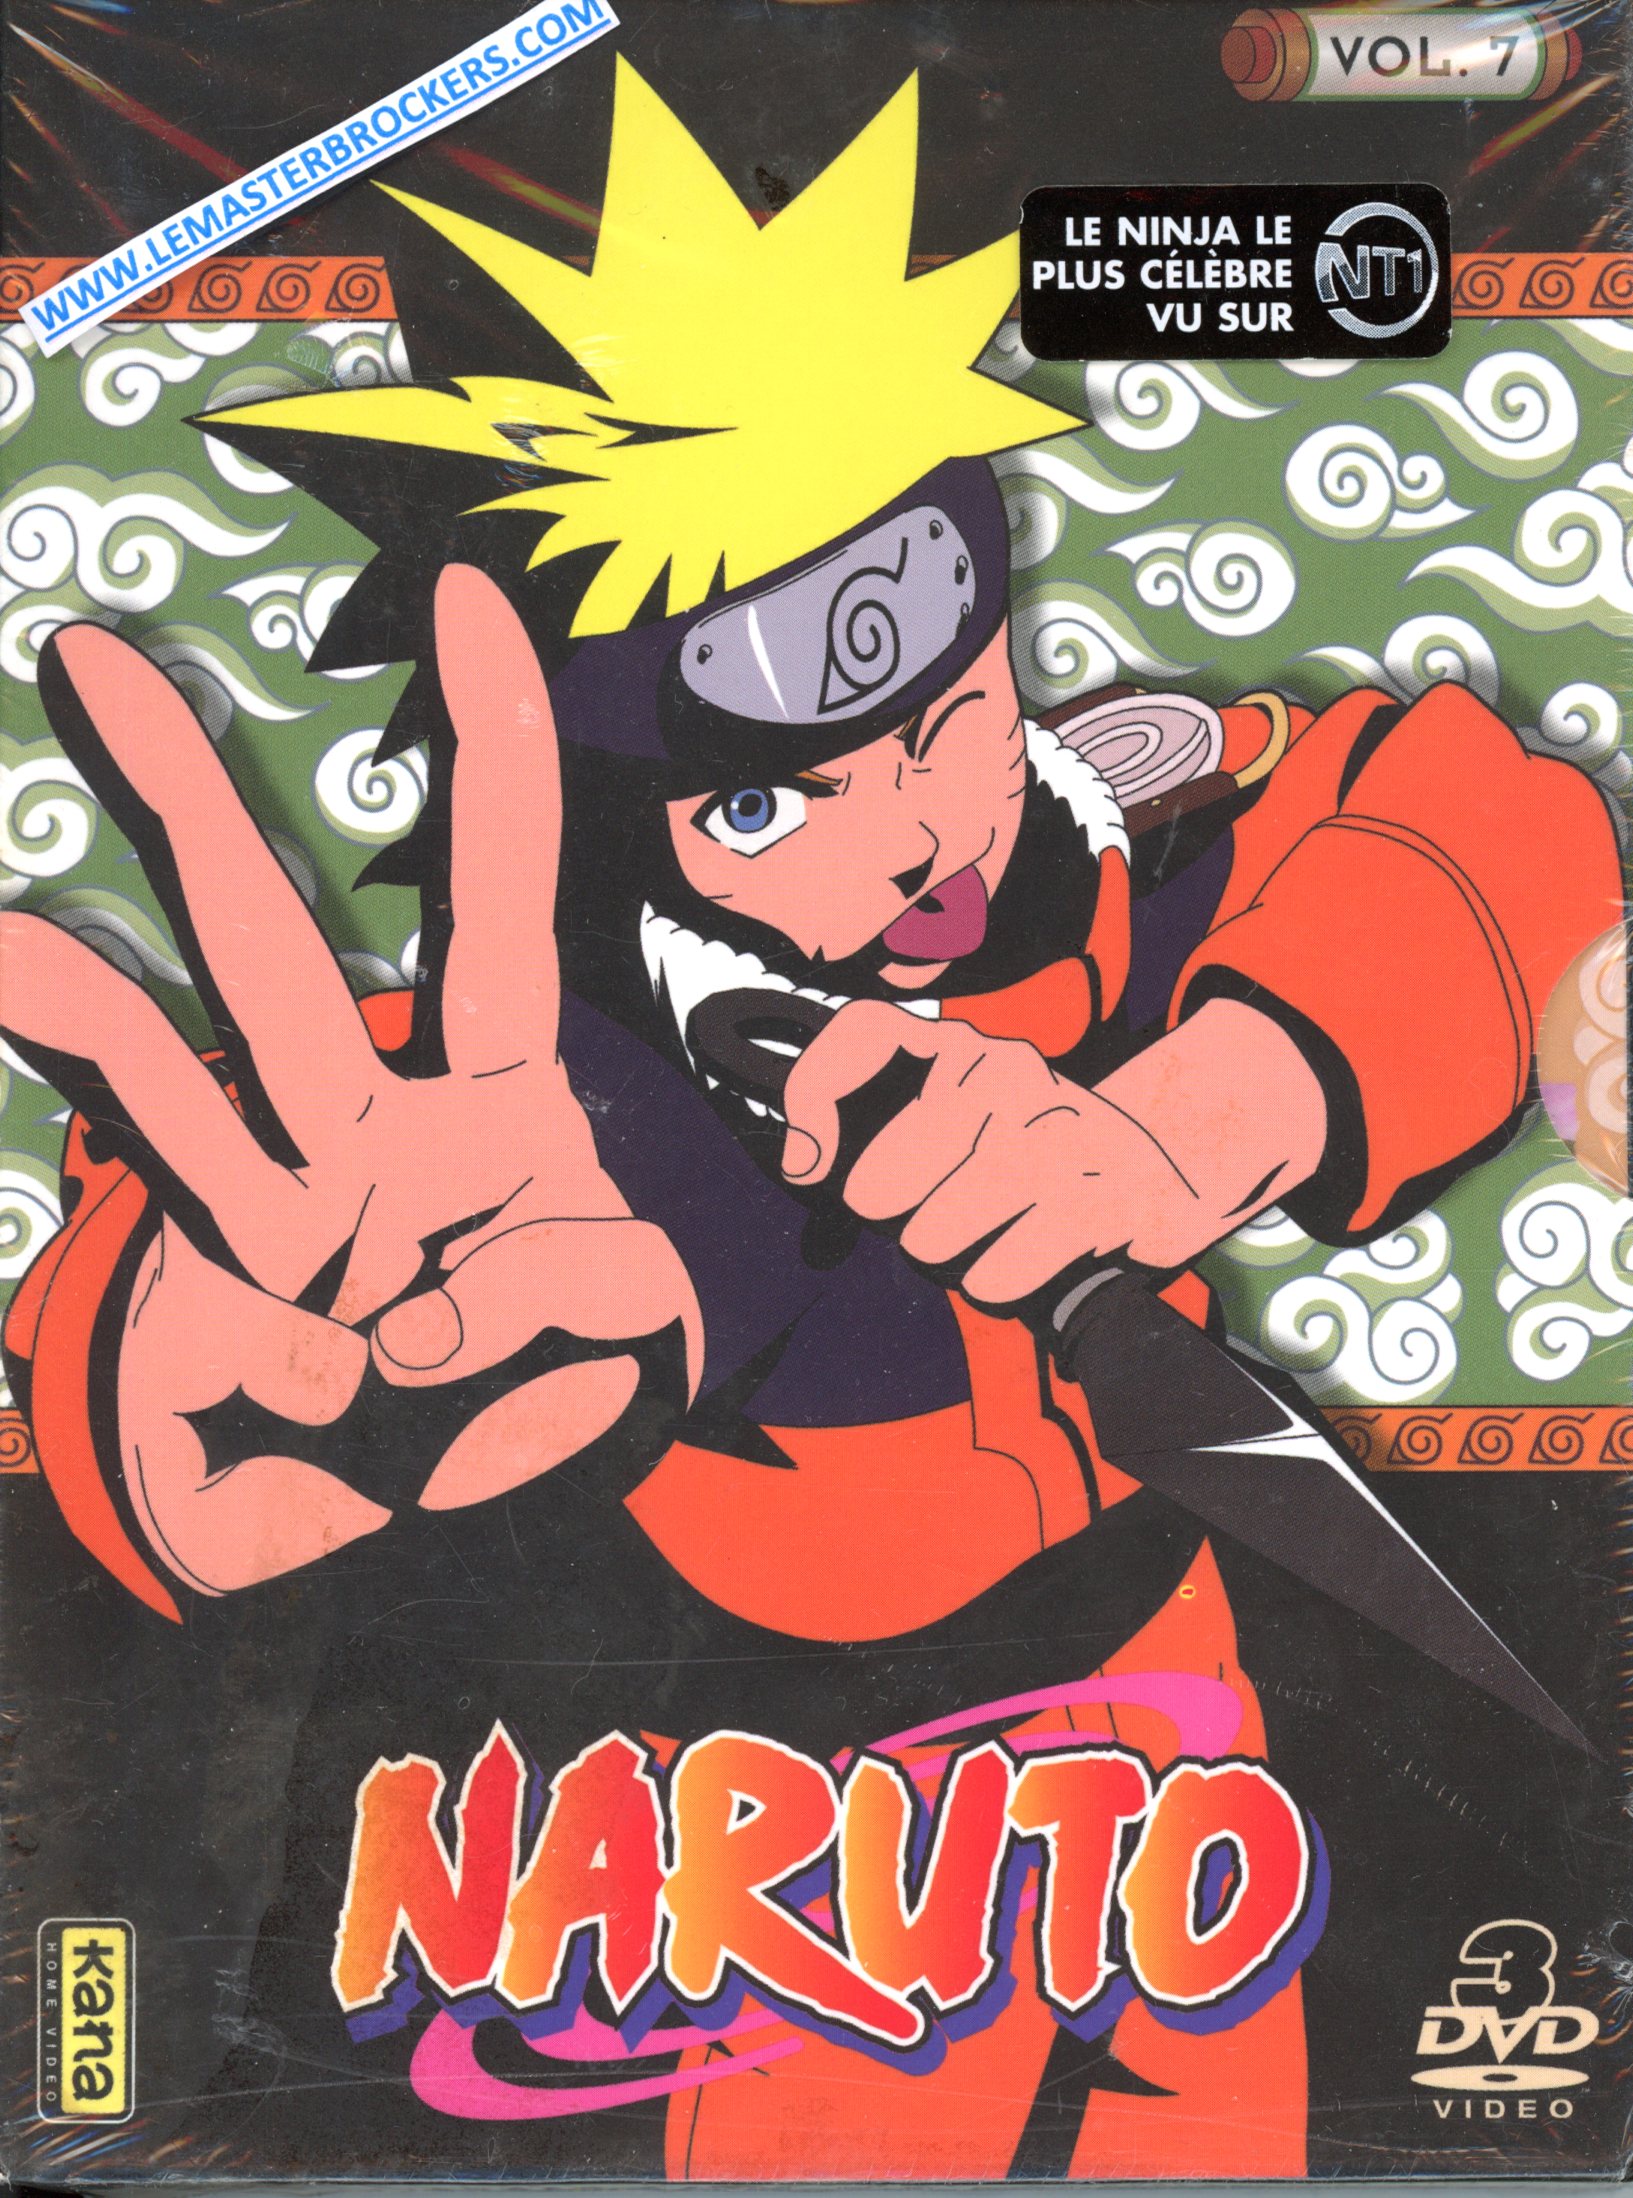 DVD NARUTO VOLUME 7